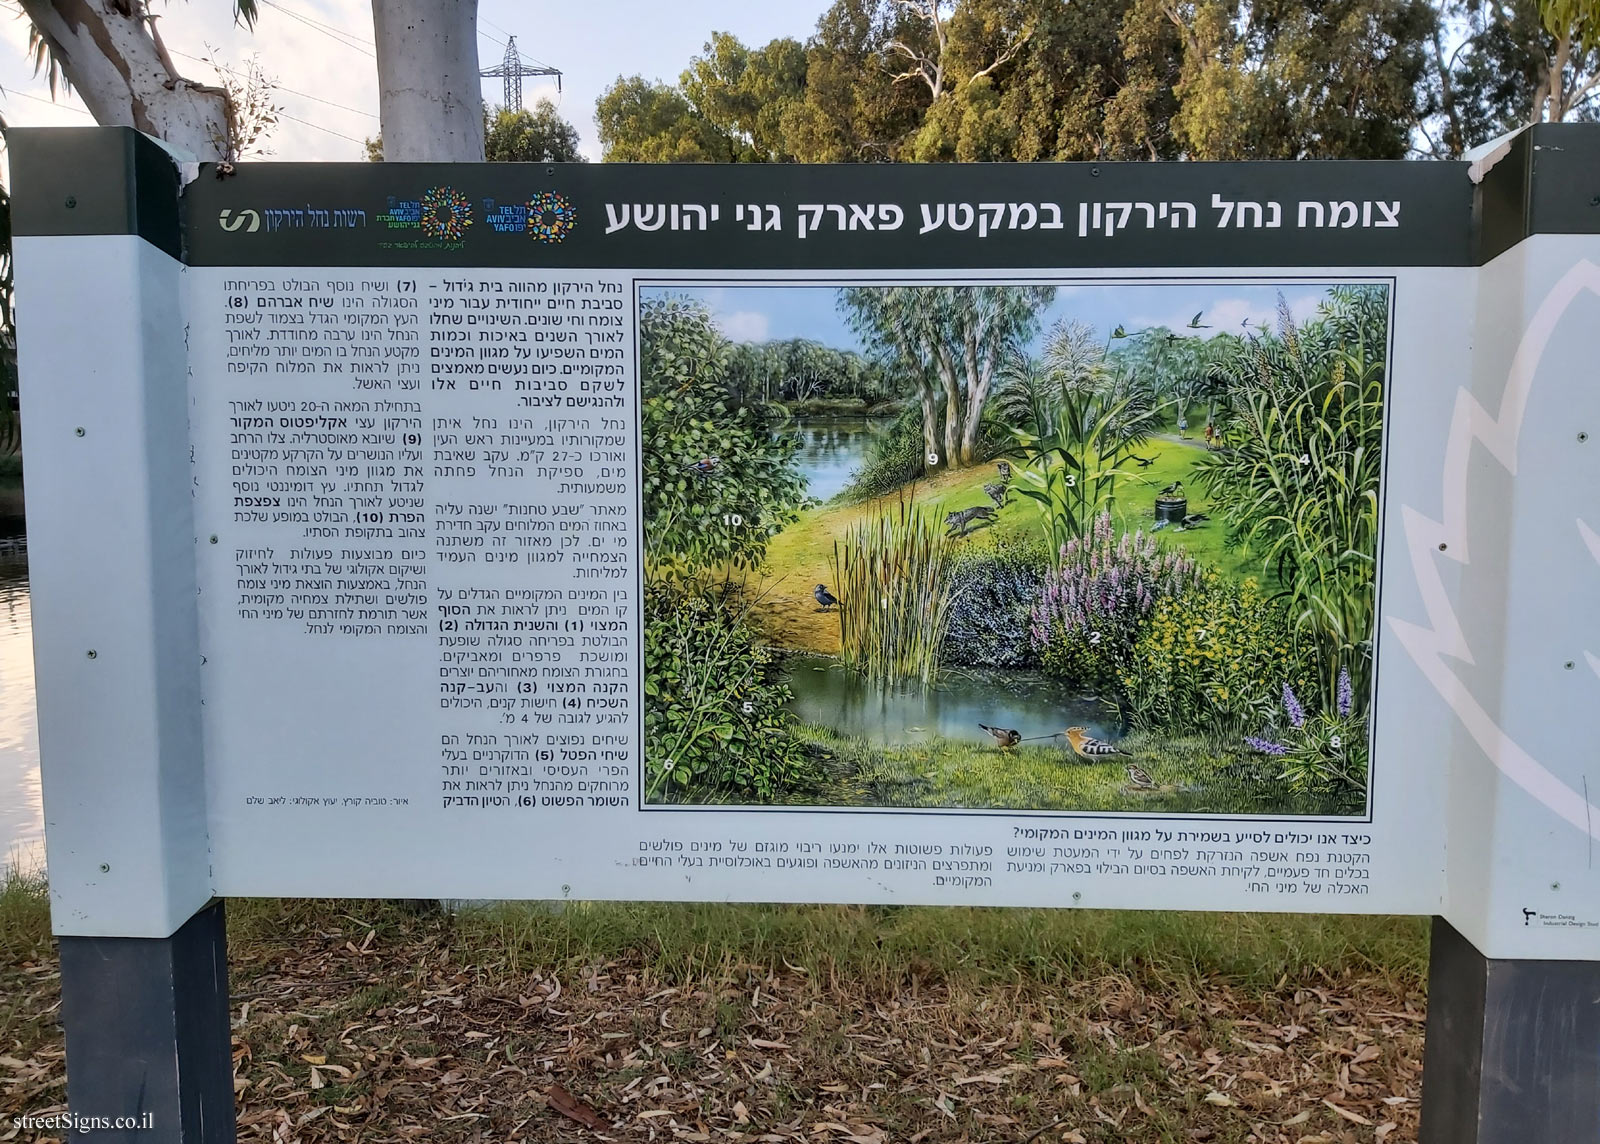 Tel Aviv - Hayarkon Park - Vegetation of the Yarkon River in the Ganei Yehoshua Park section